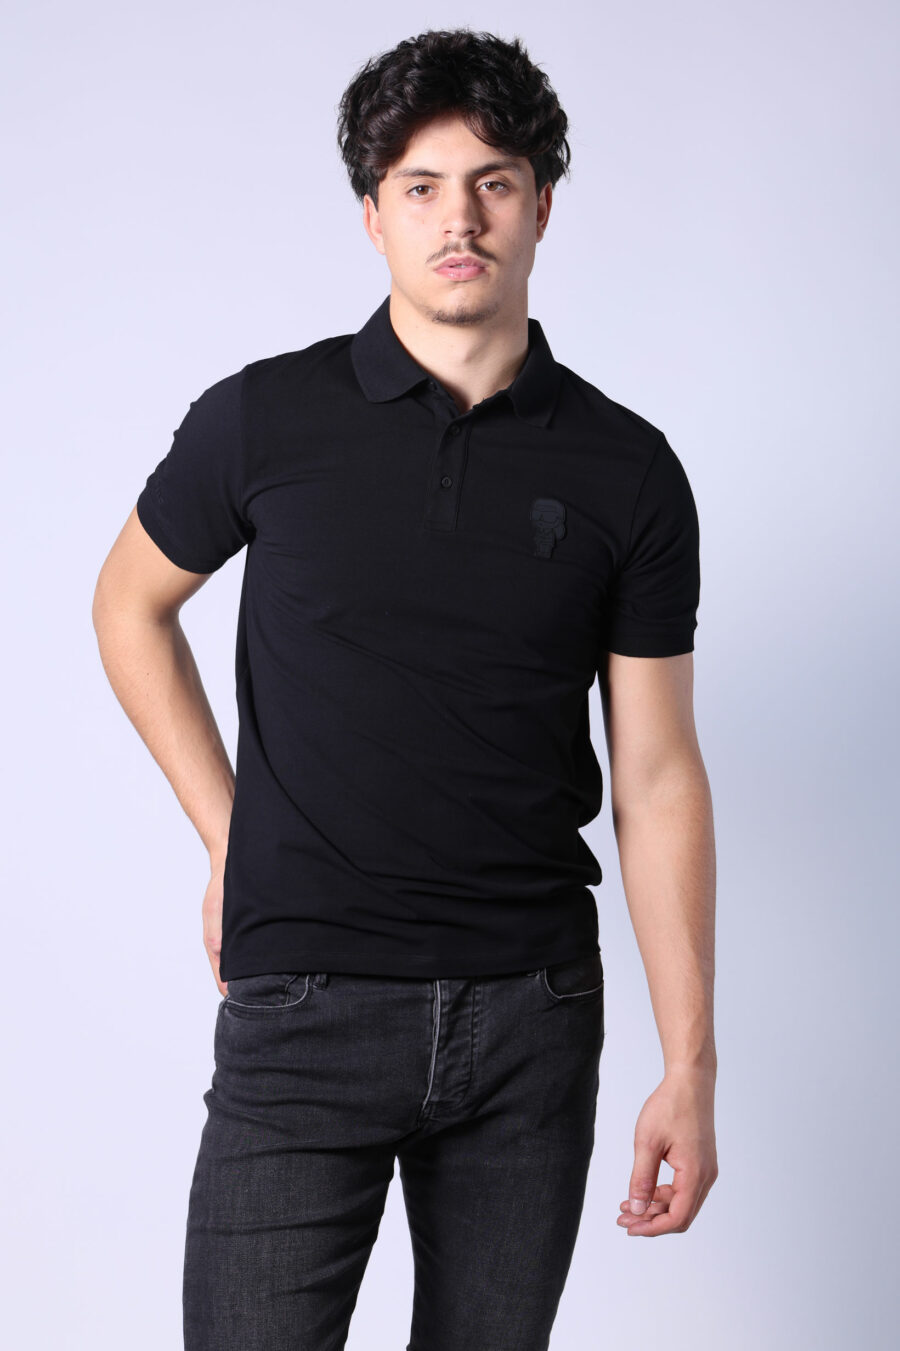 Black polo shirt with monochrome mini-logo - Untitled Catalog 05716